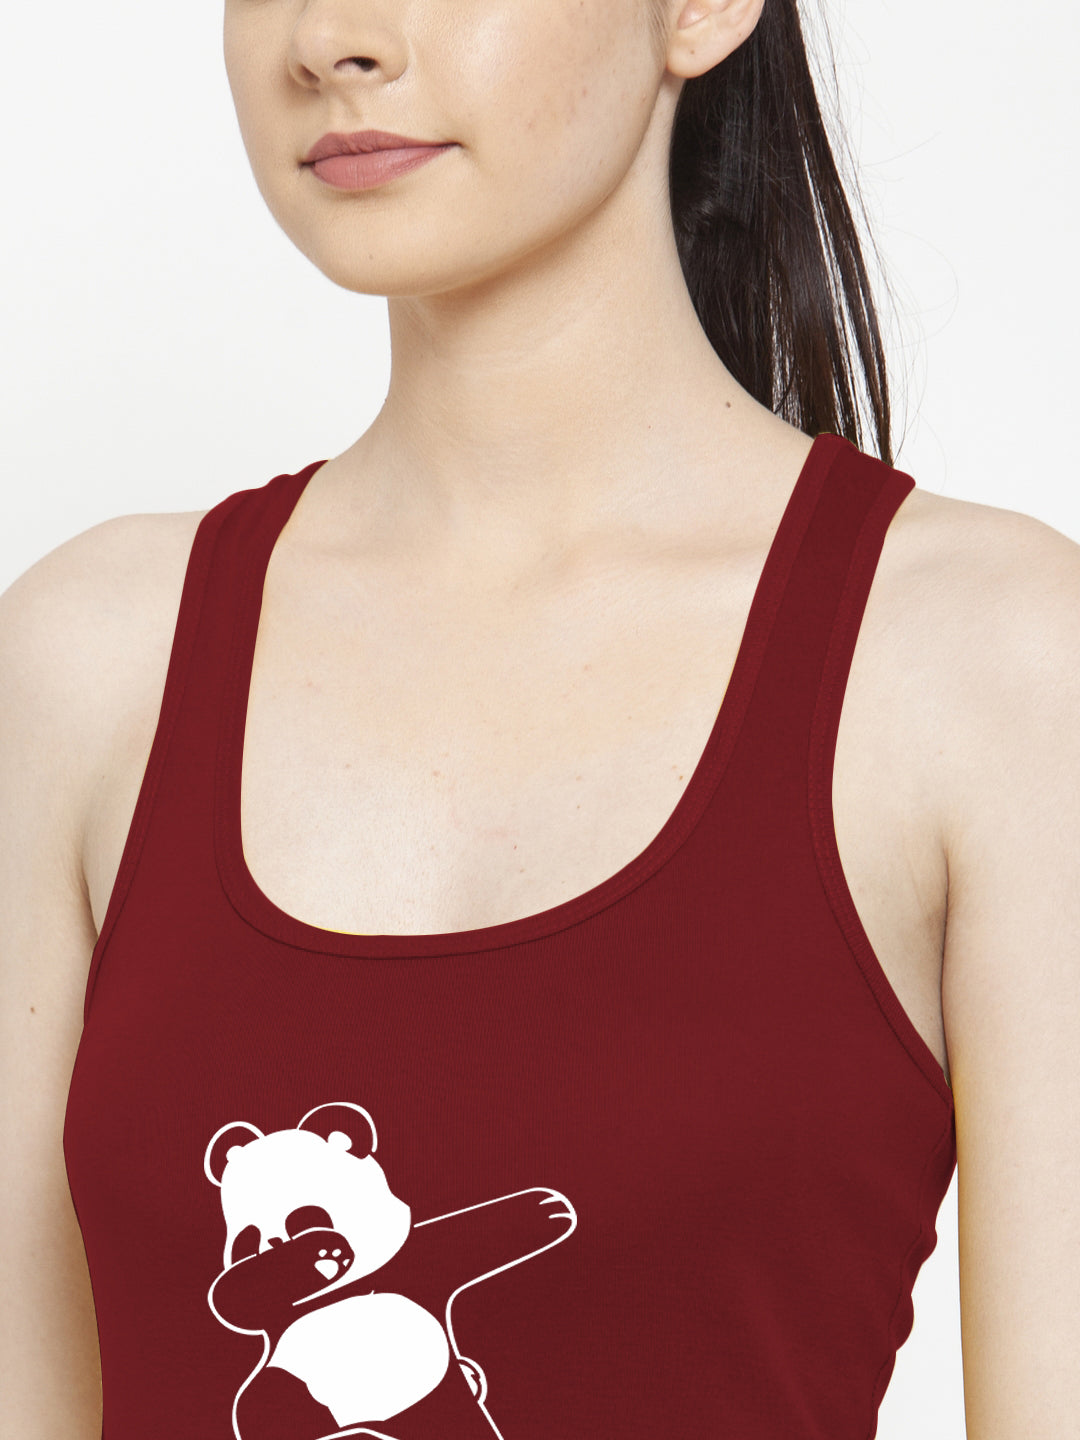 Bear Printed sleeveless Women Black Tank Top/Vest - Friskers